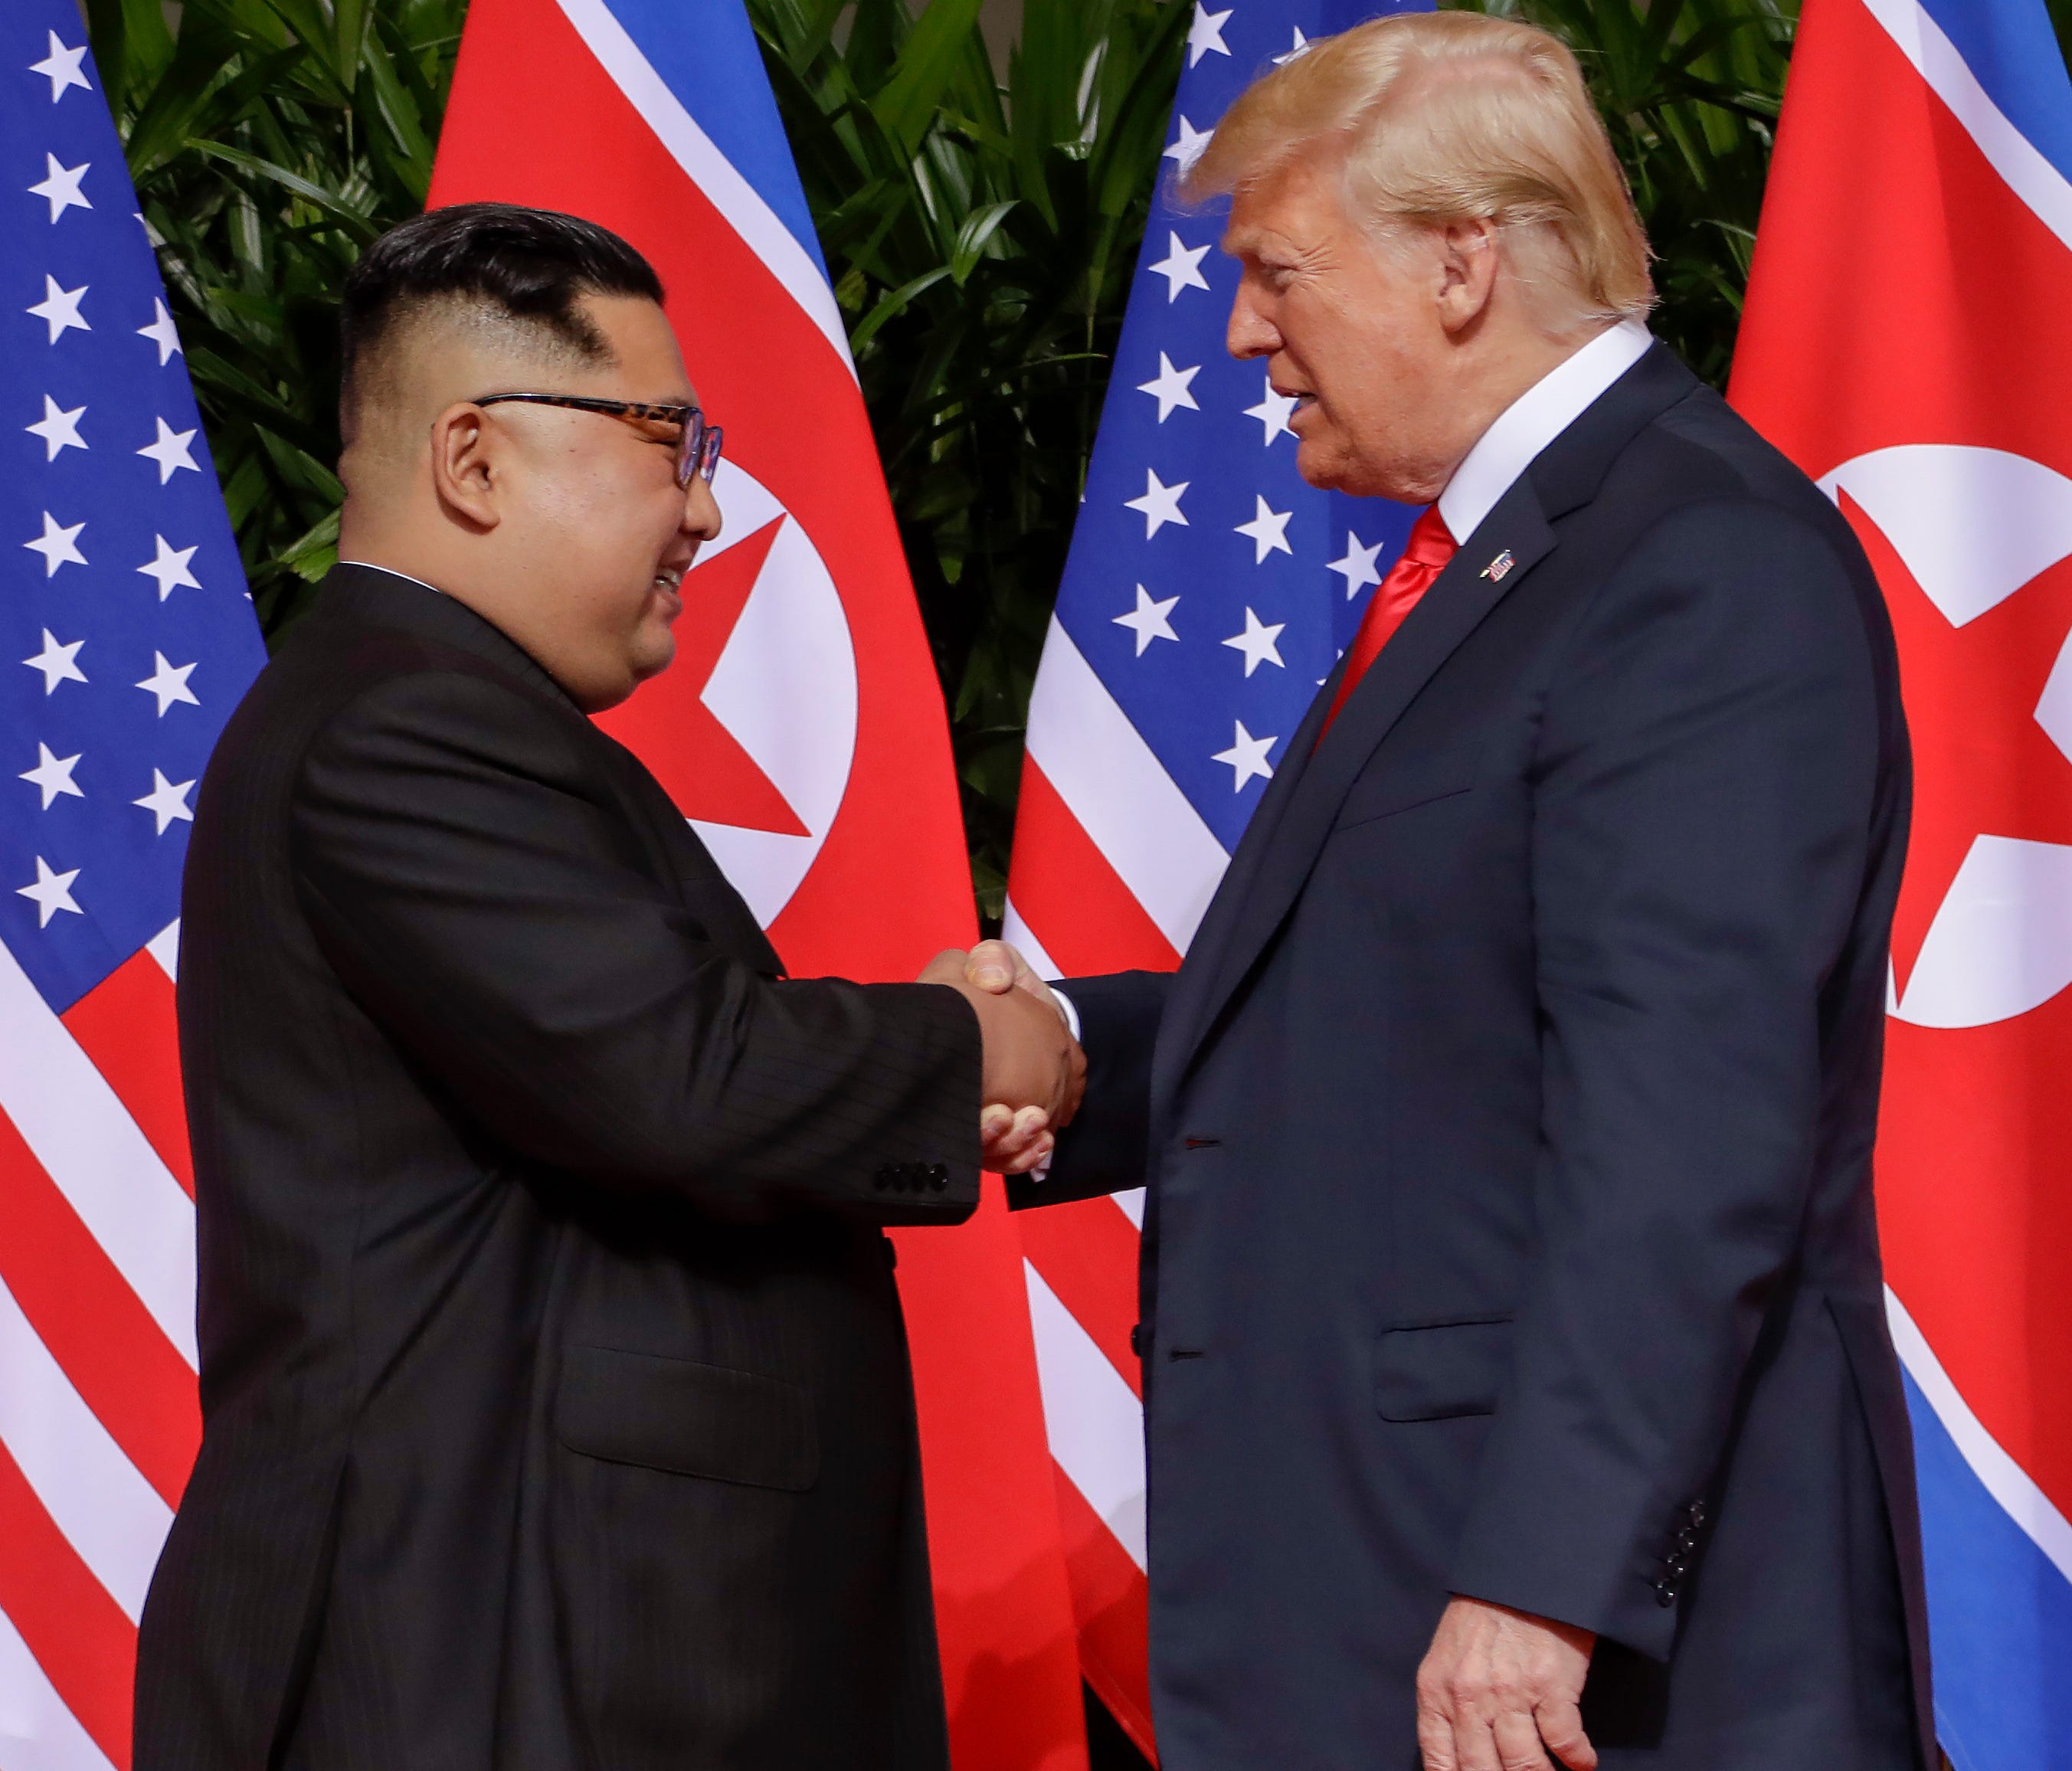 President Trump shakes hands with North Korea leader Kim Jong Un at the Capella resort on Sentosa Island in Singapore.